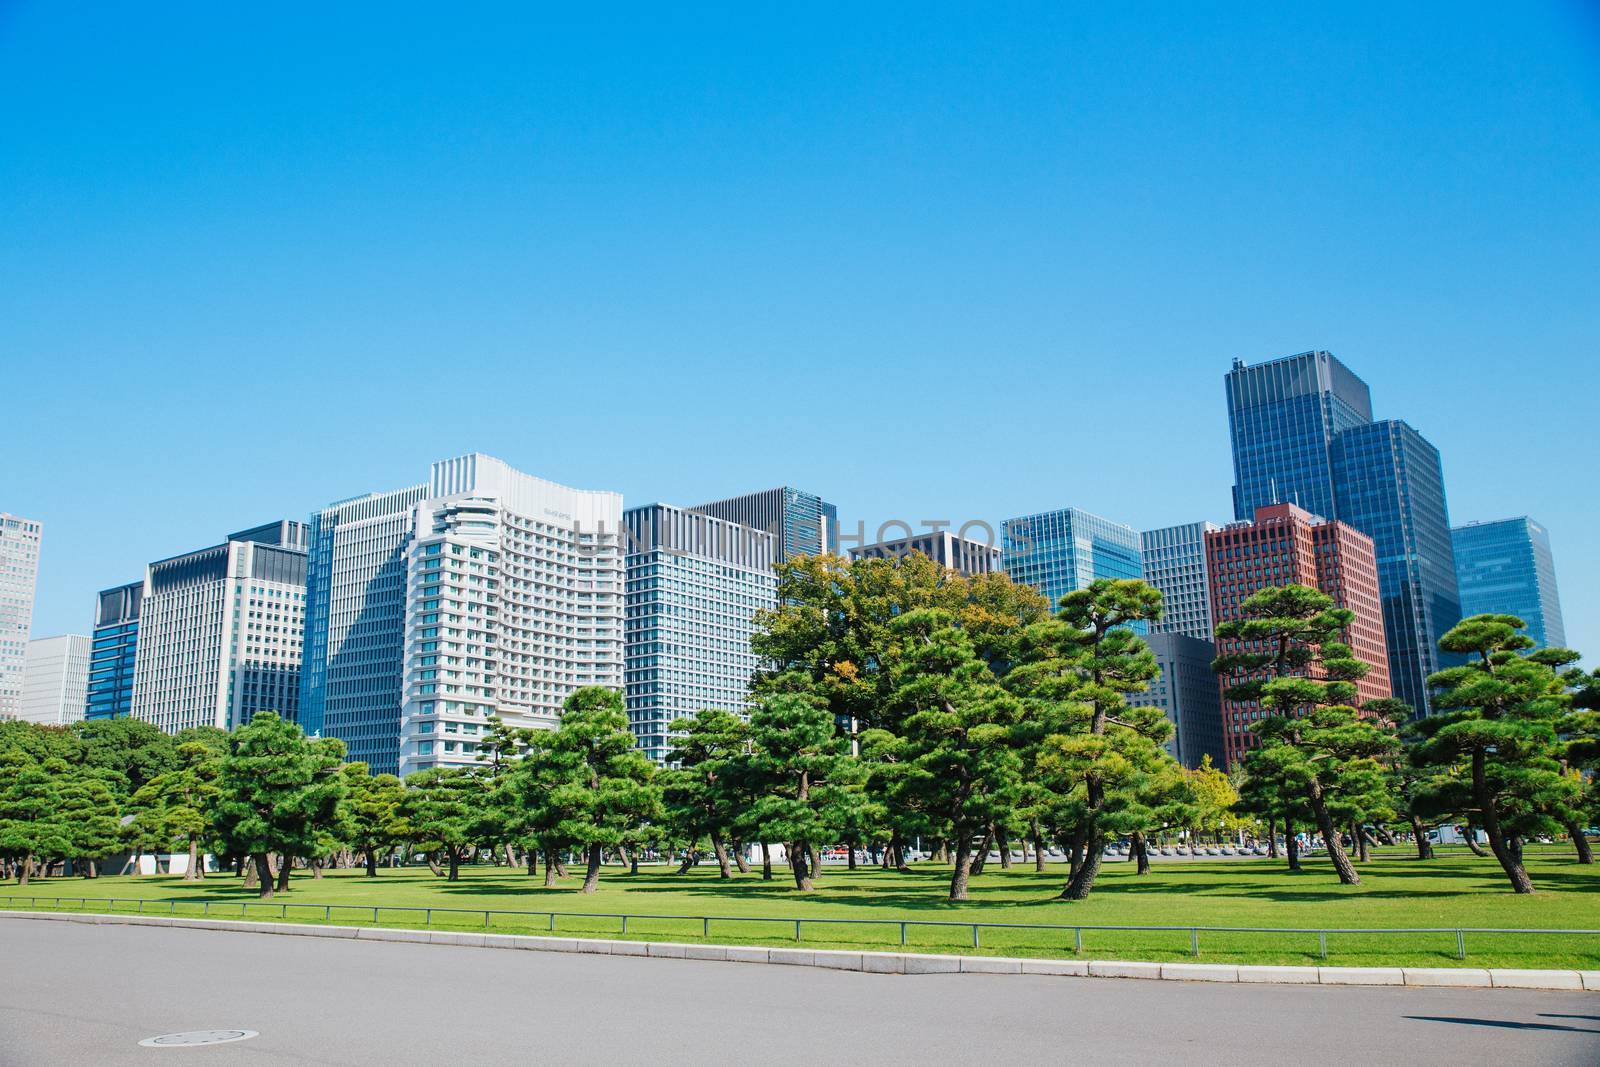 Tokyo modern building under blue sky by cozyta